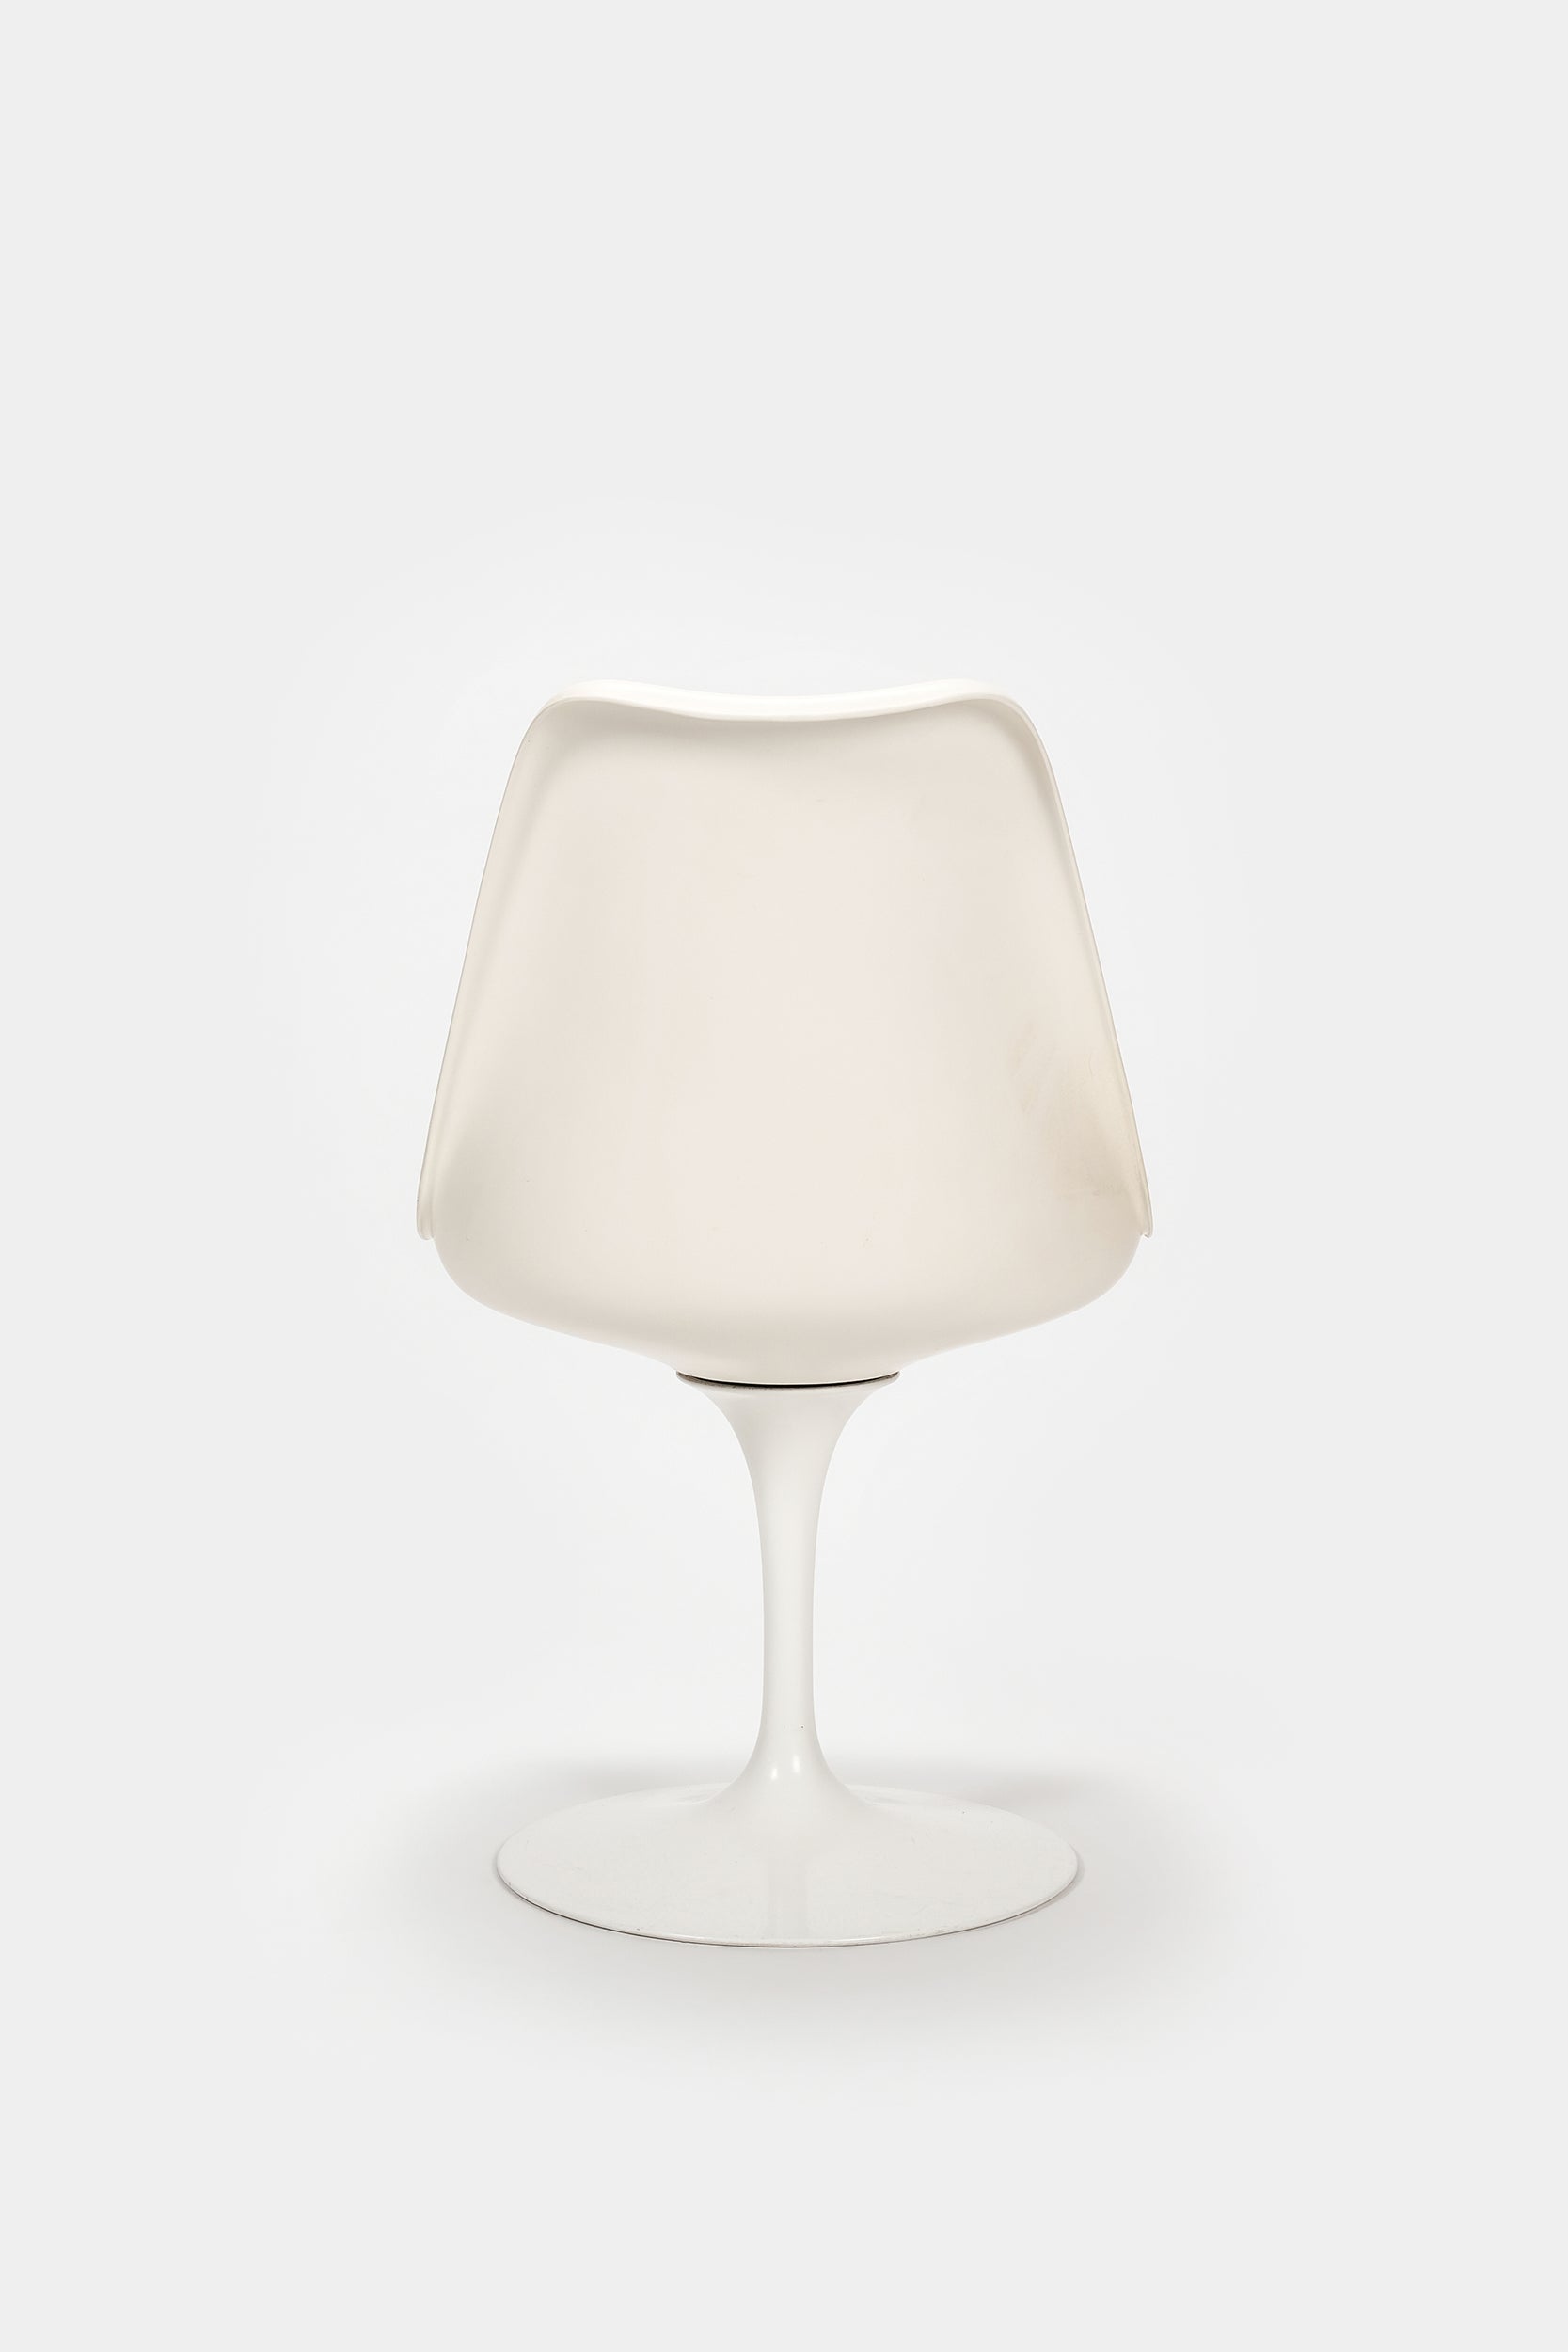 4 Eero Saarinen Tulip swivel chairs, Knoll Int., 60s